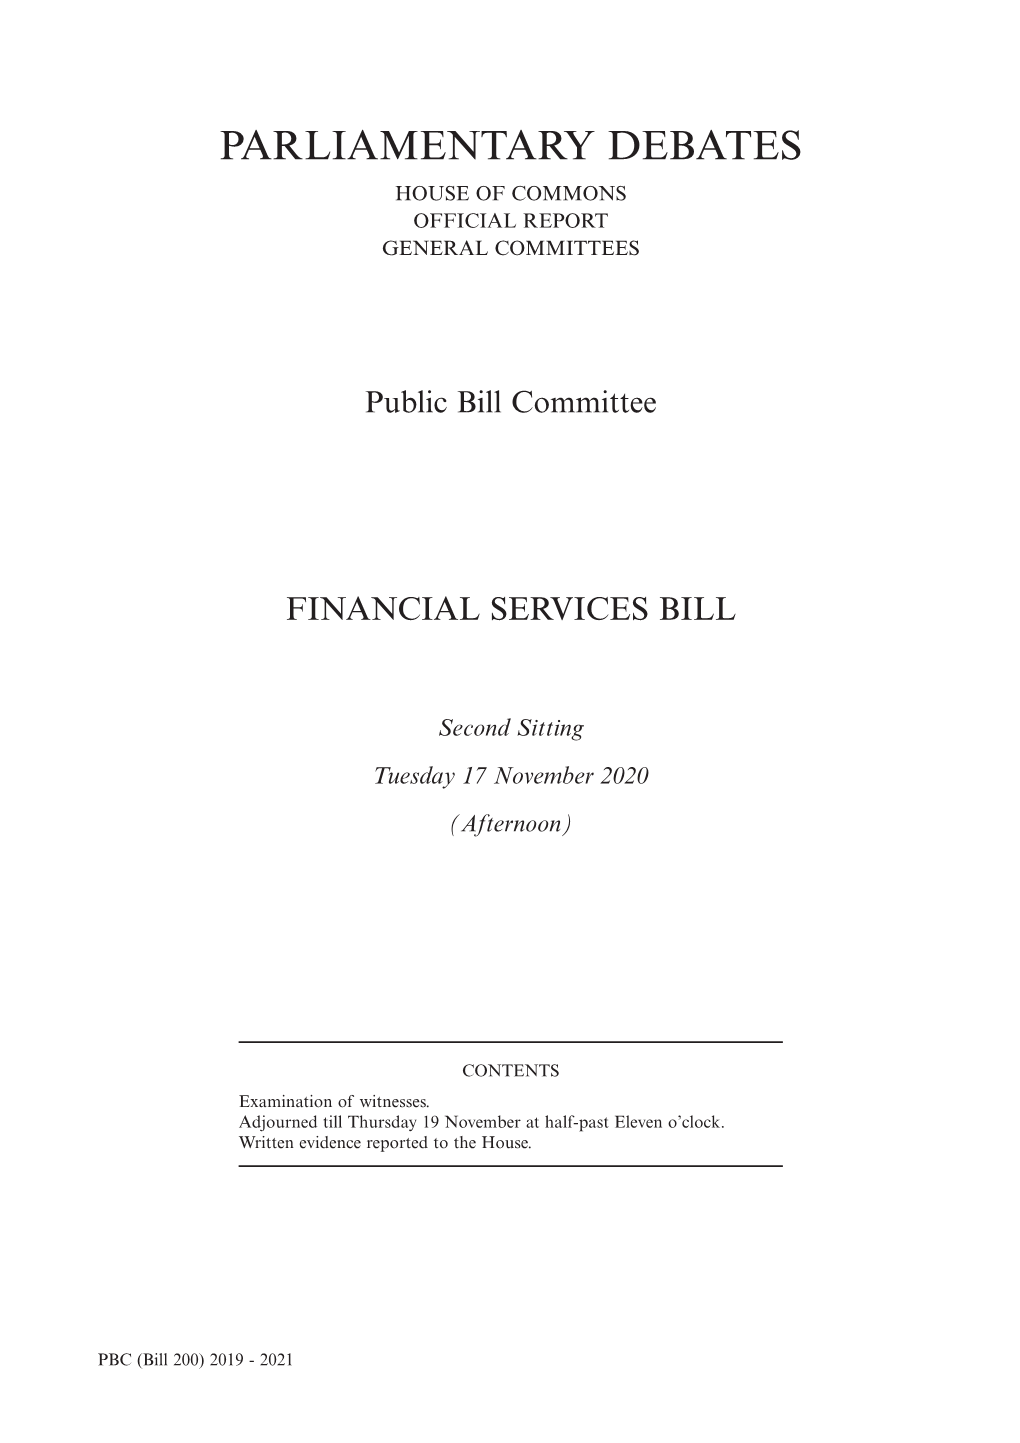 Financial Services Bill